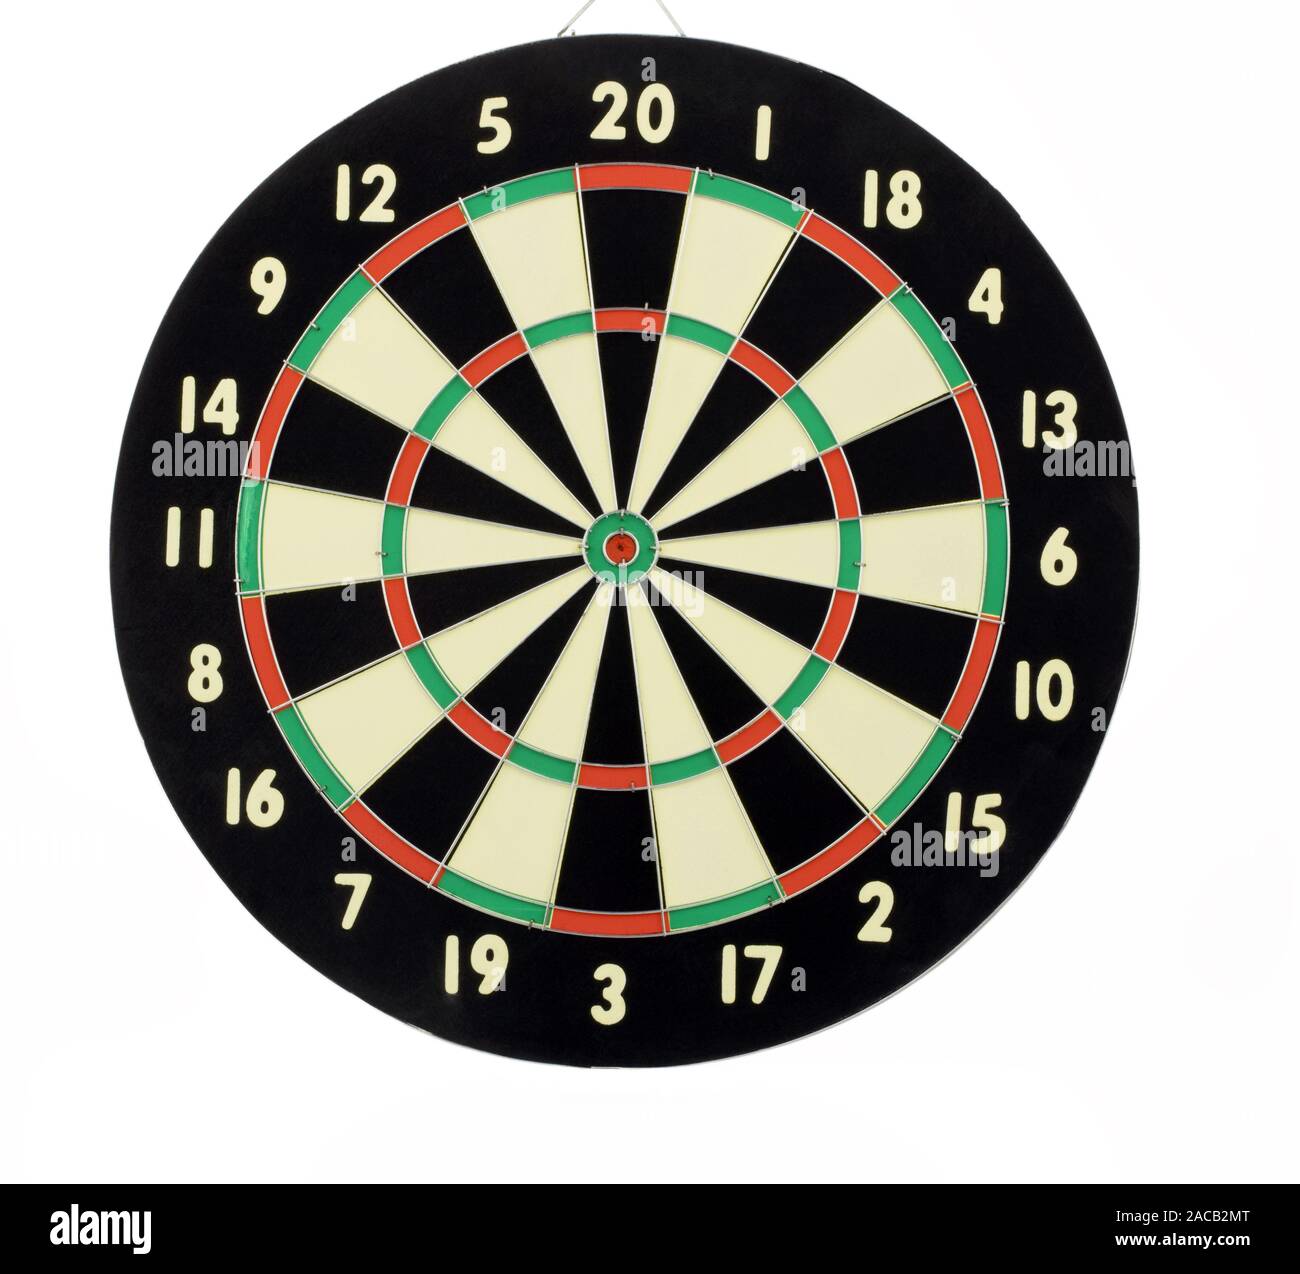 Arrow game with throwing arrow Stock Photo - Alamy